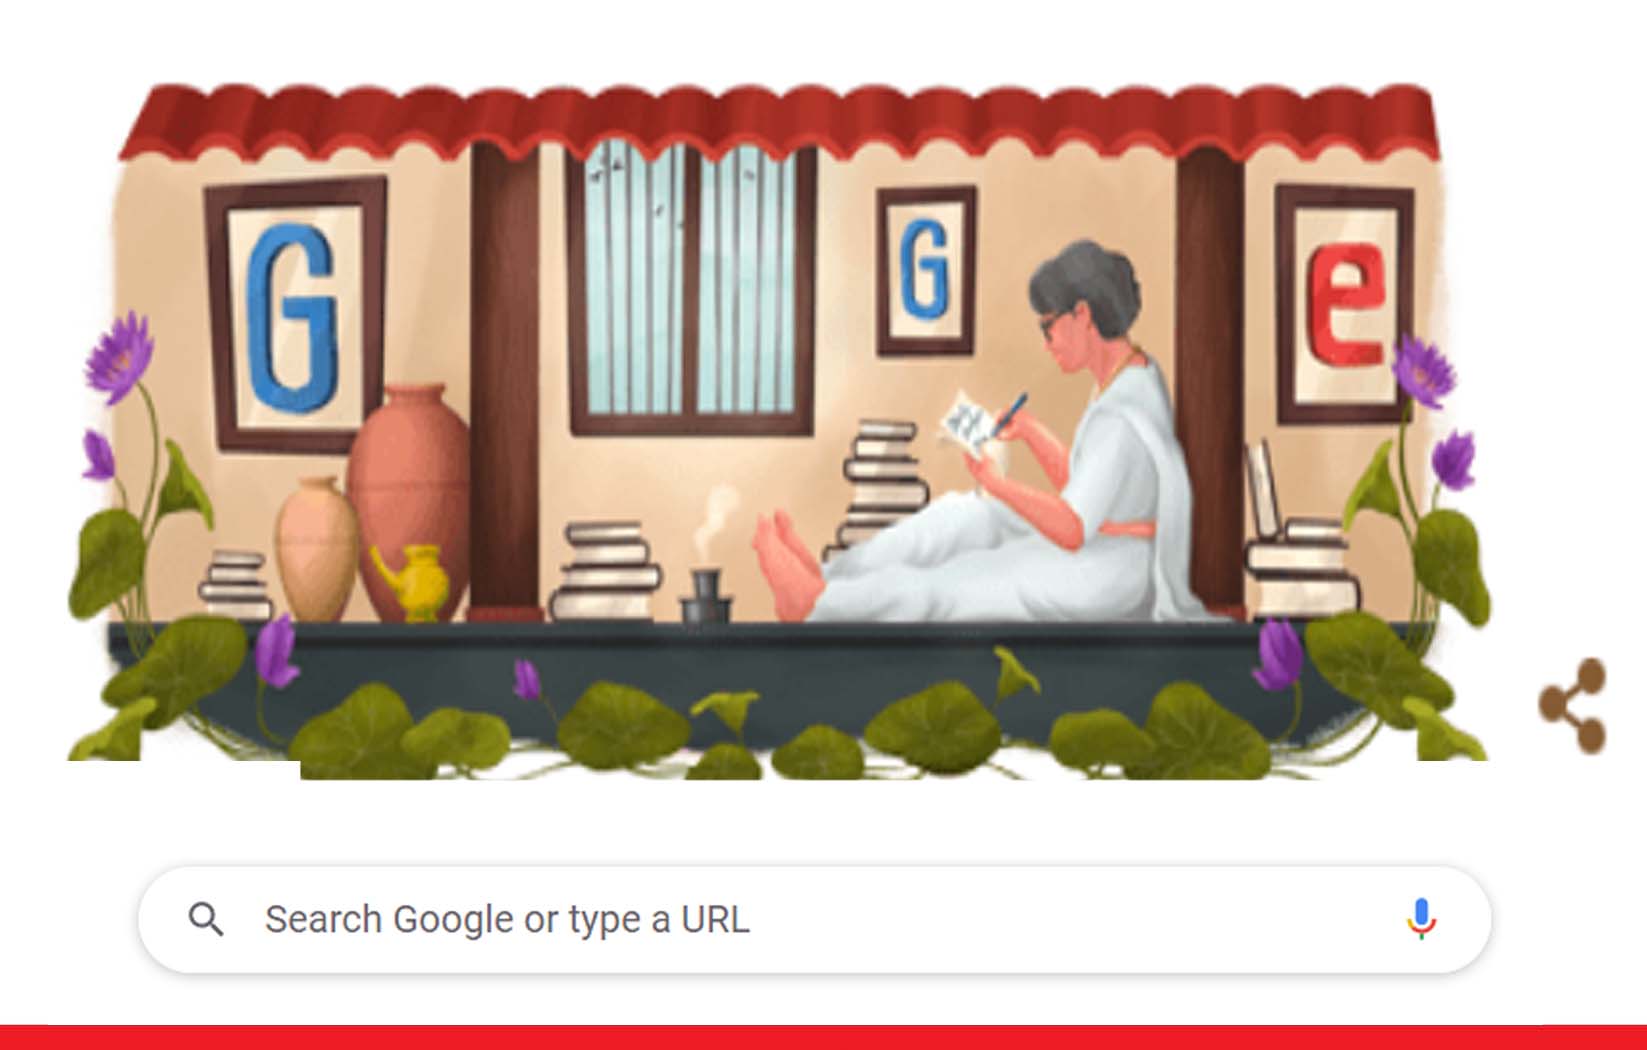 मलयालम साहित्य की दादी बालमणि अम्मा का आज गूगल ने बनाया डूडल